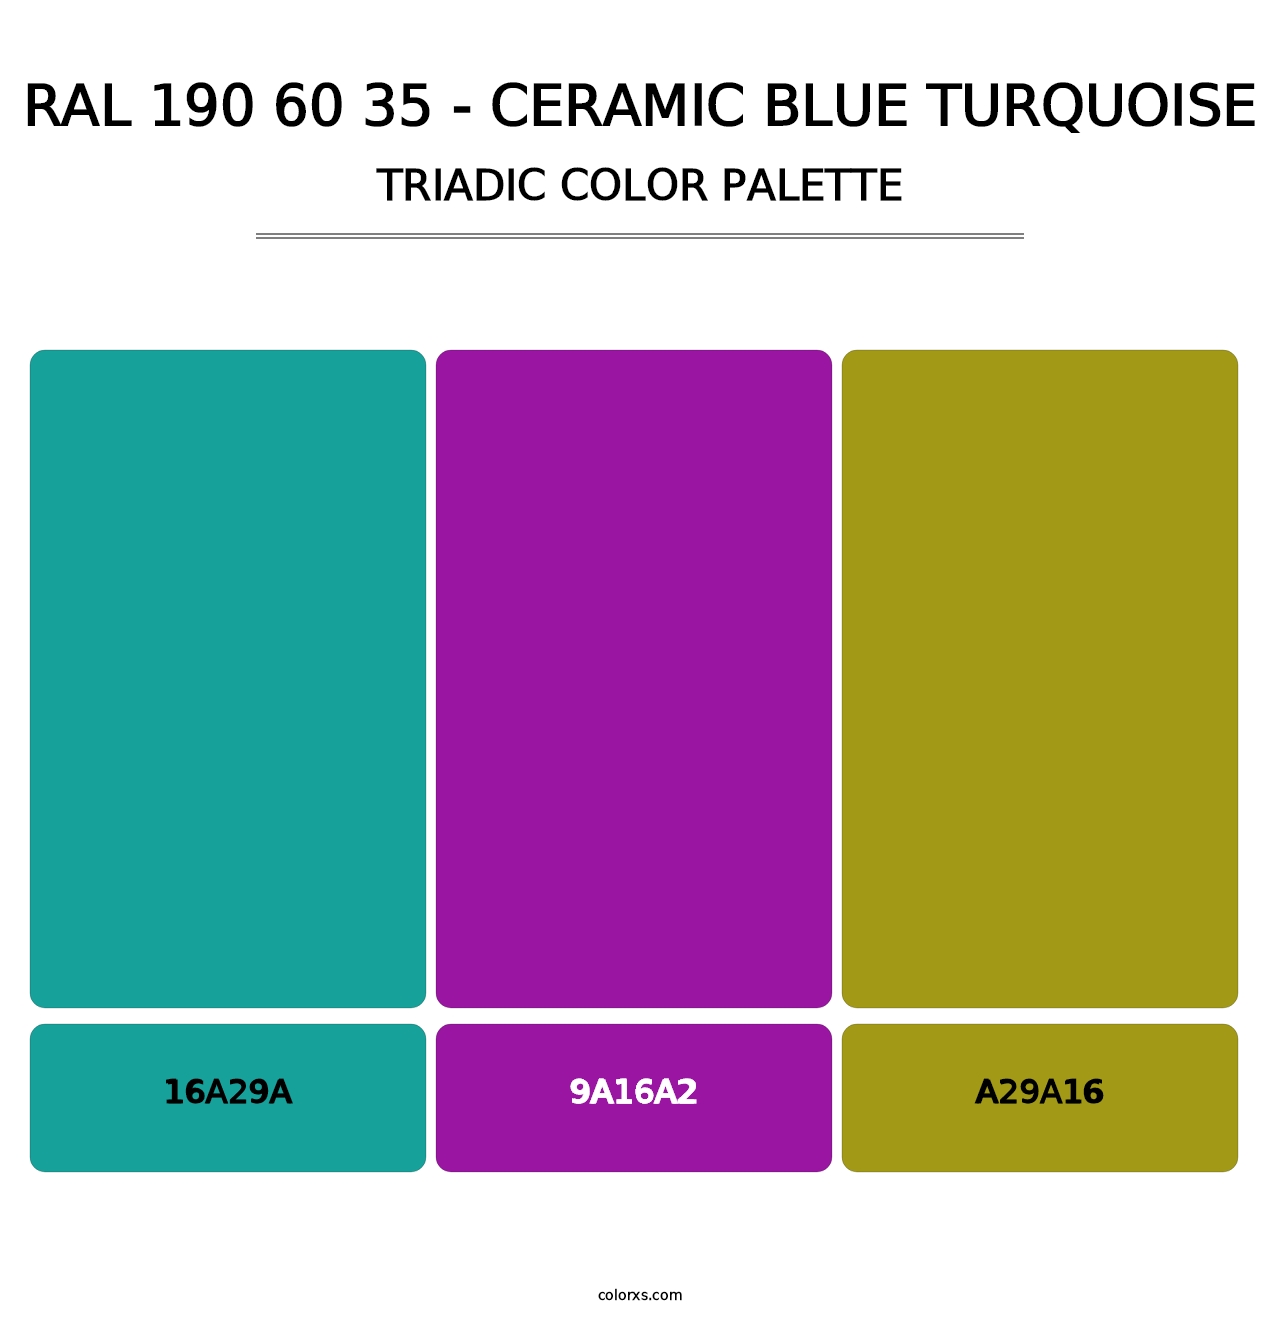 RAL 190 60 35 - Ceramic Blue Turquoise - Triadic Color Palette